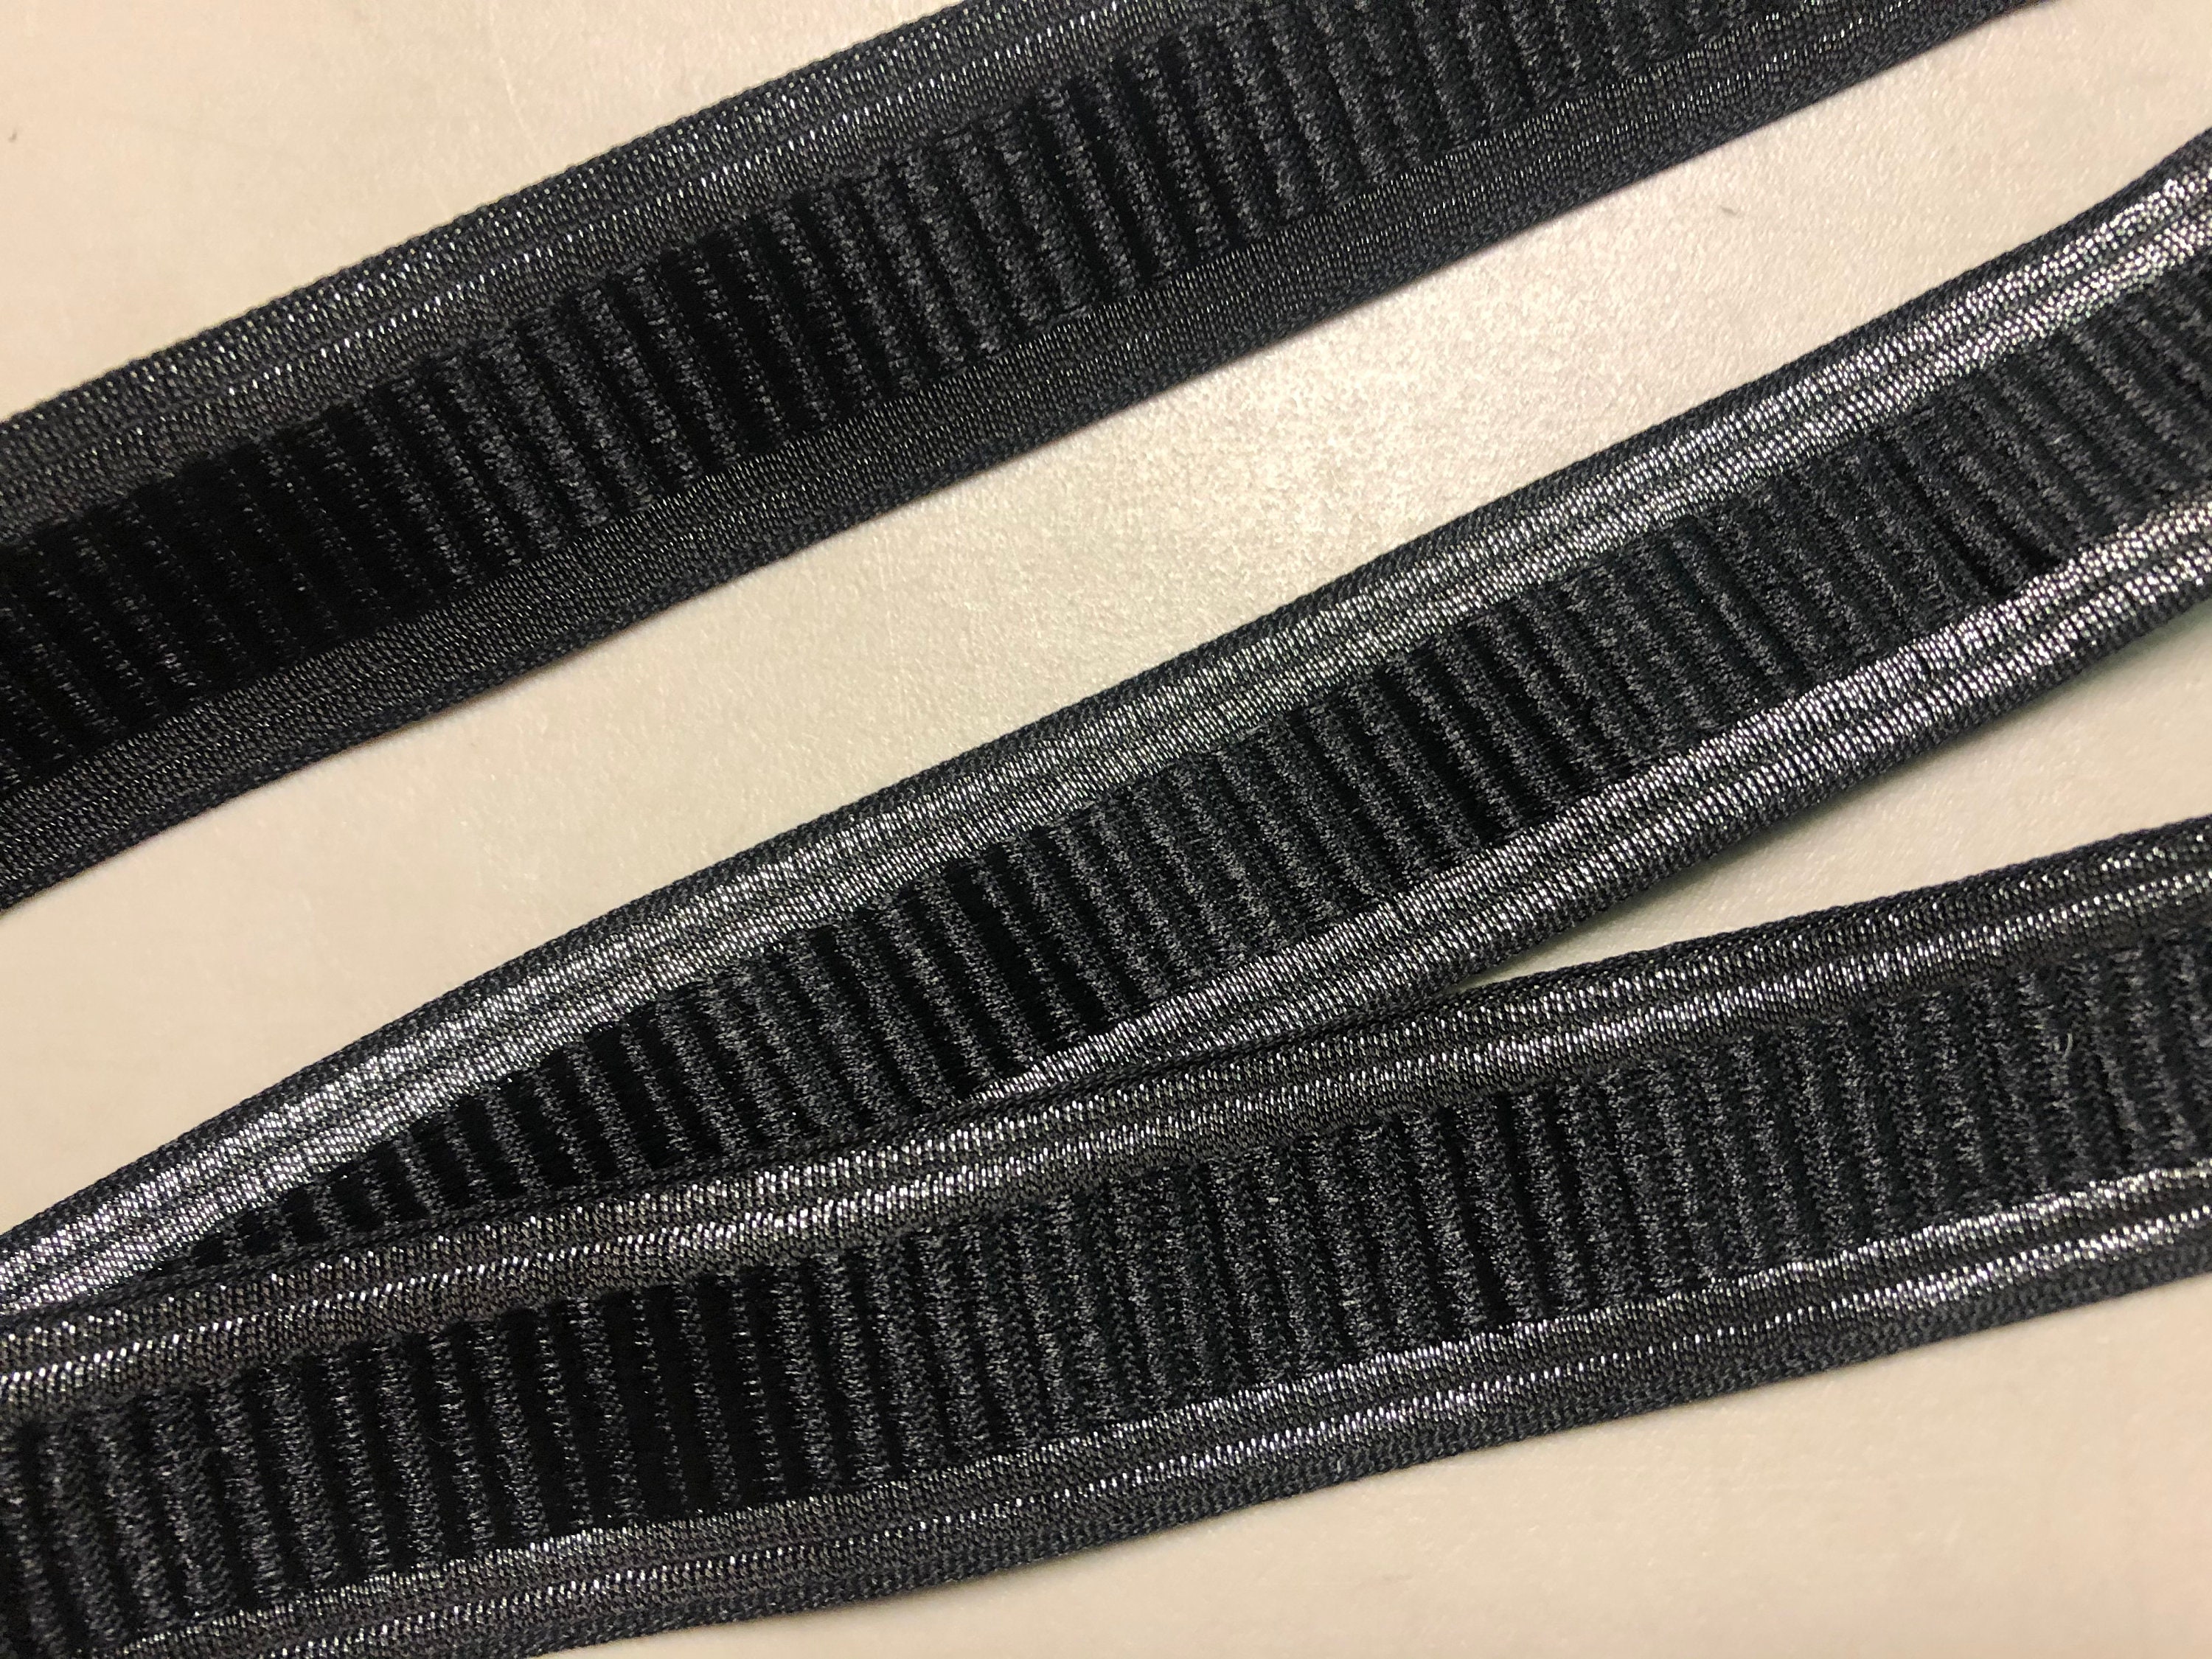 Brocade Ribbon Black Ribbed Texture with Metallic Silver | Etsy